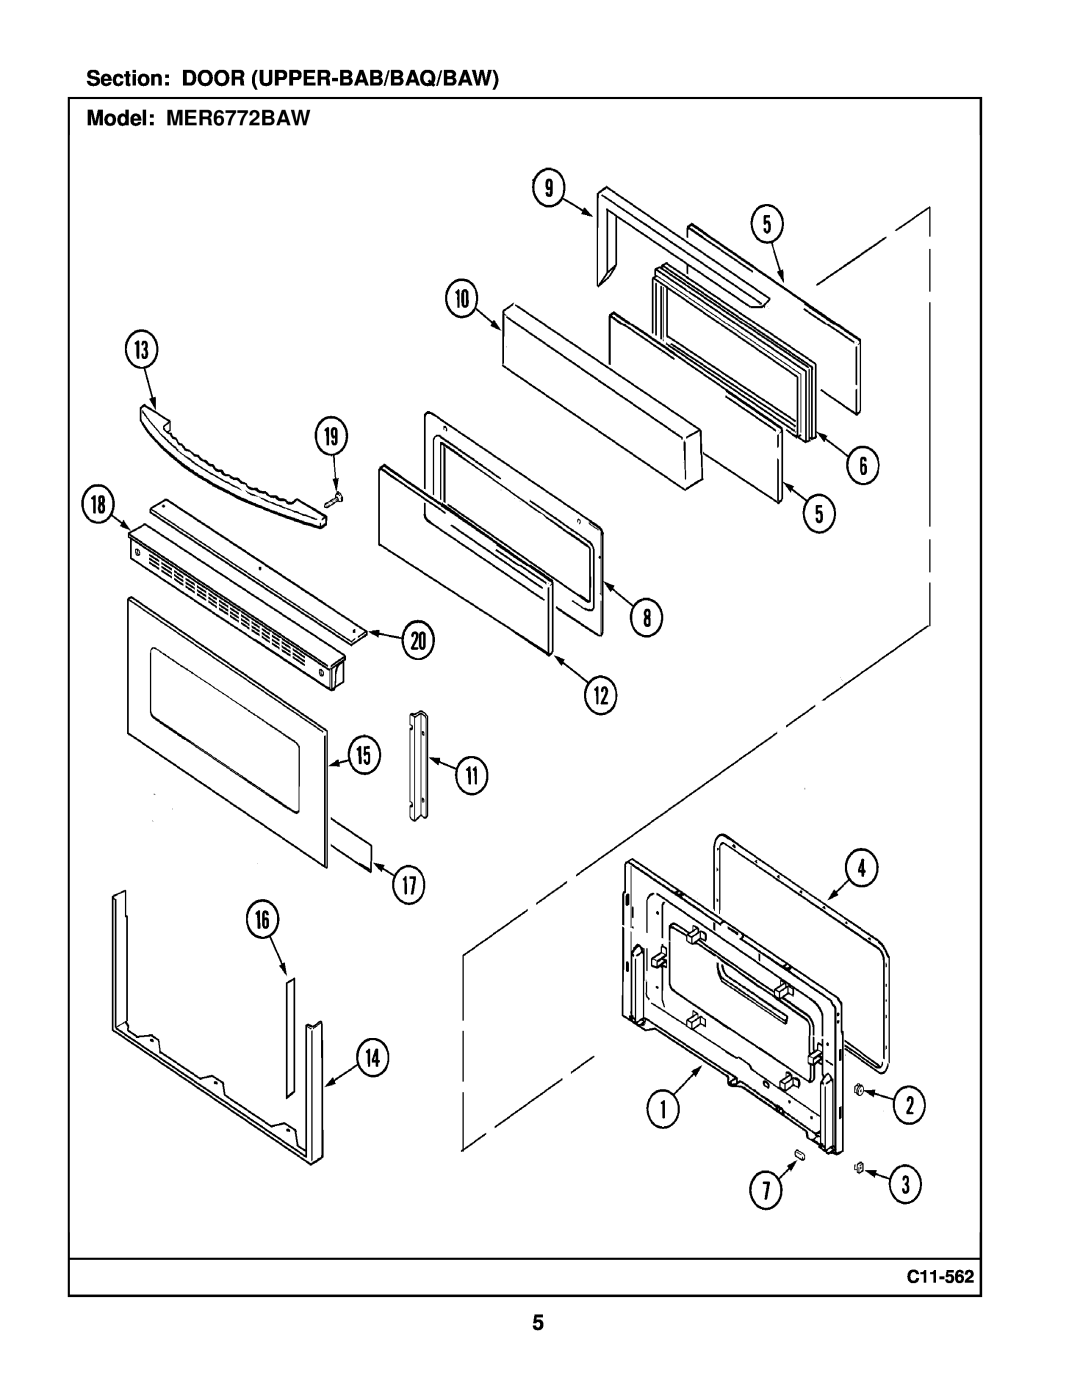 Maytag manual Section DOOR UPPER-BAB/BAQ/BAW Model MER6772BAW, C11-562 